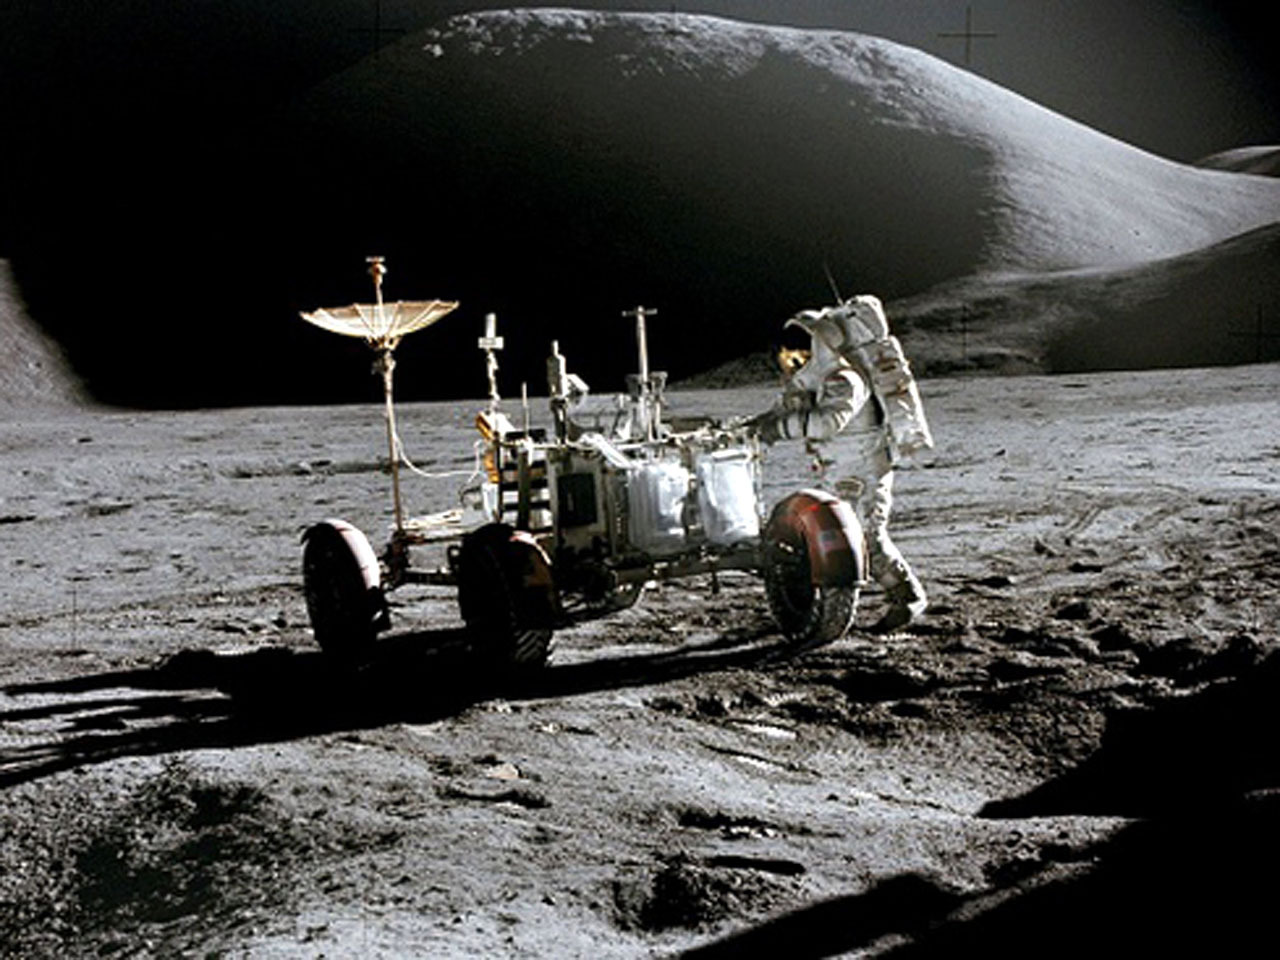 Apollo moon rocks challenge lunar water theory - CBS News